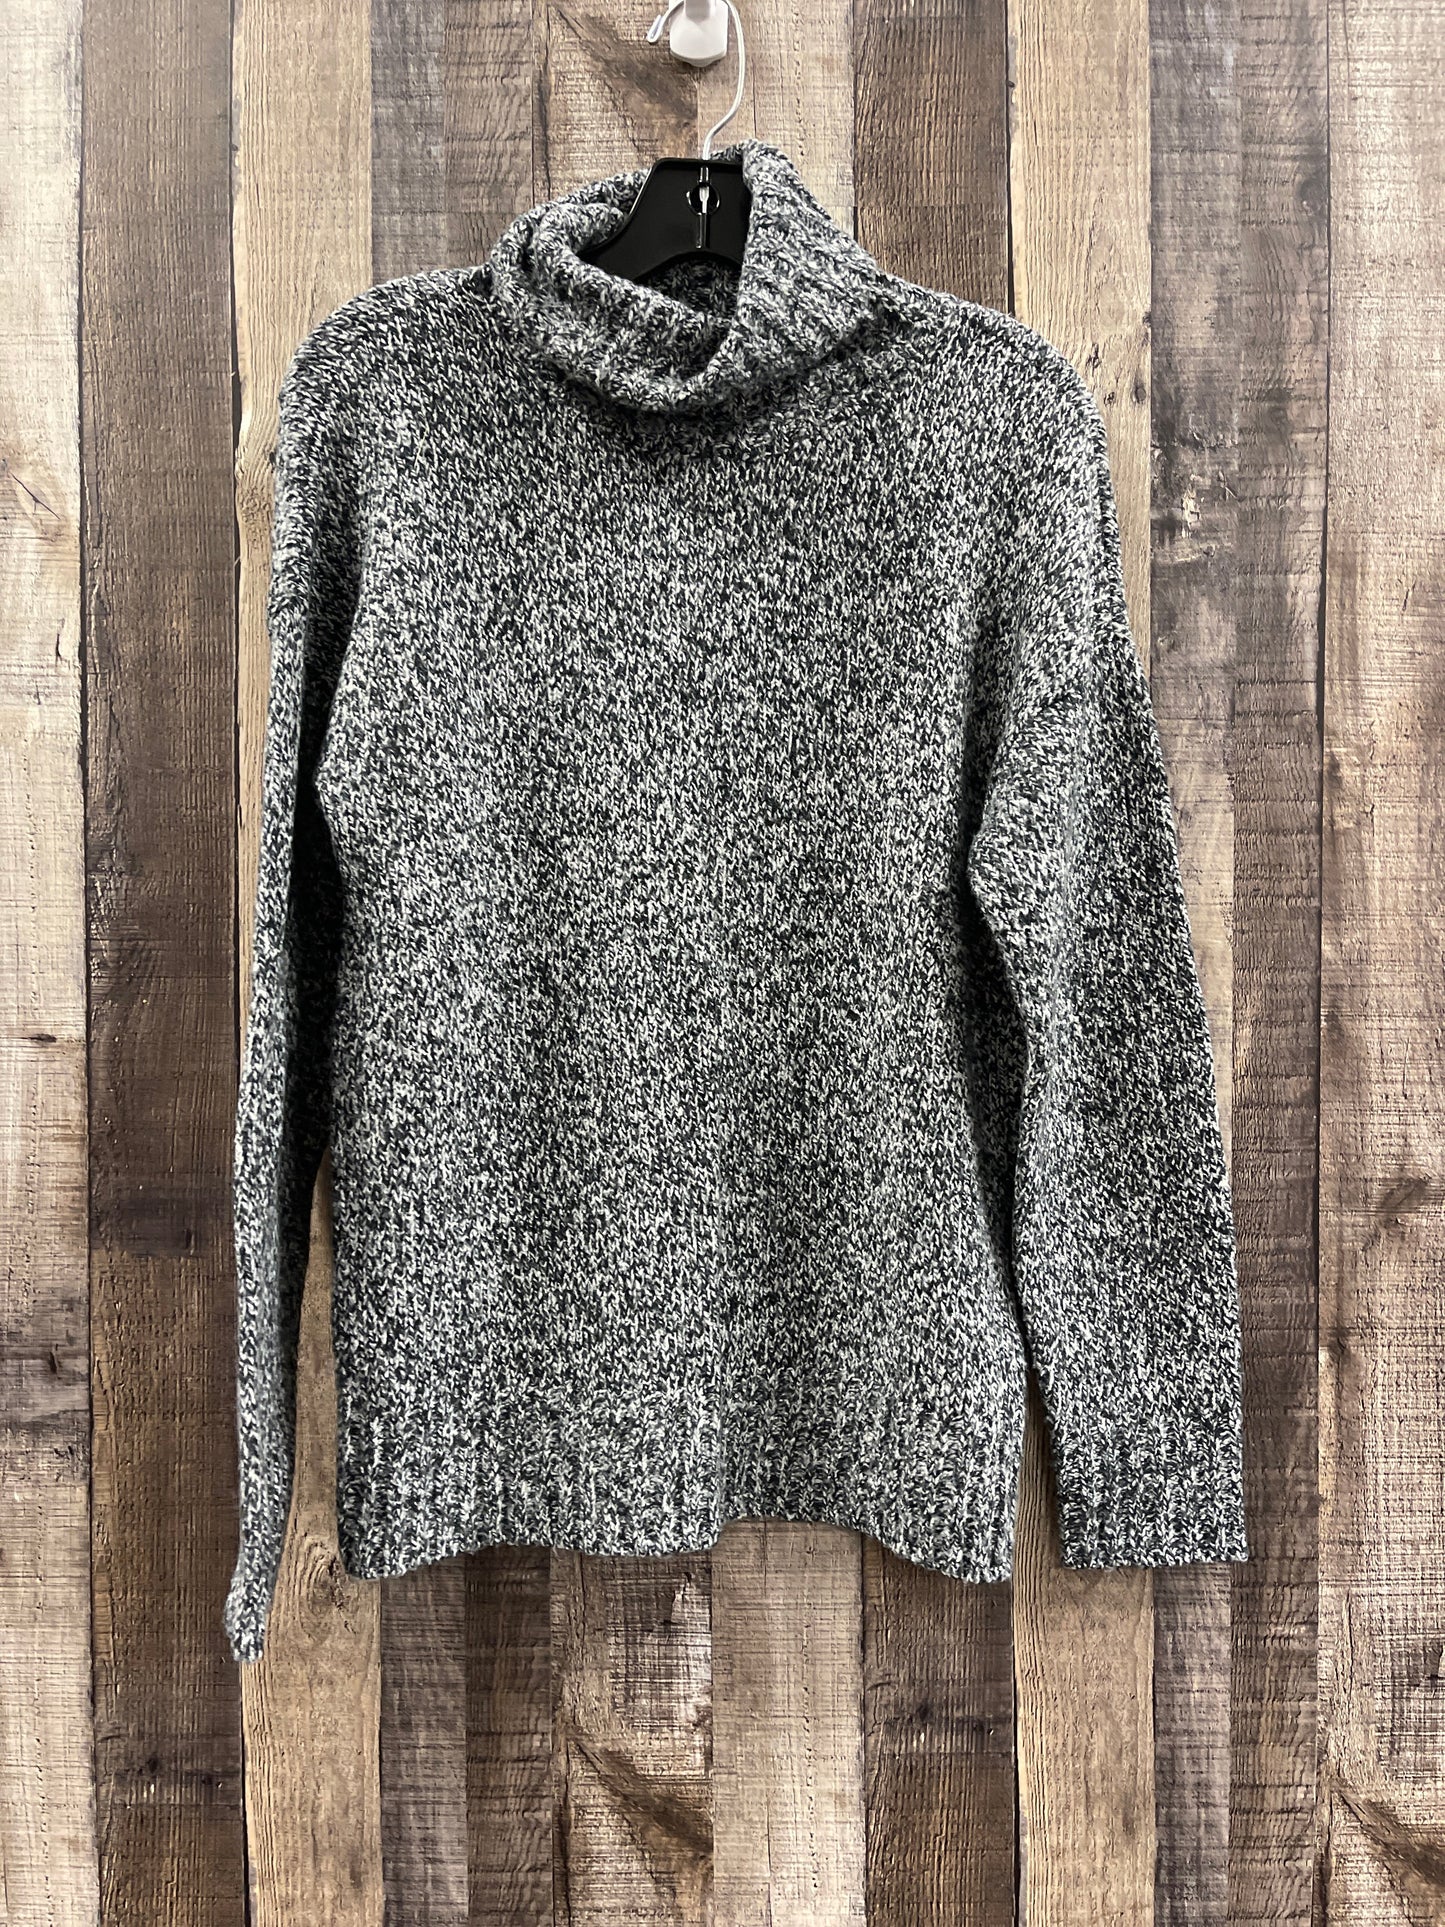 Sweater By Olivia Sky  Size: S